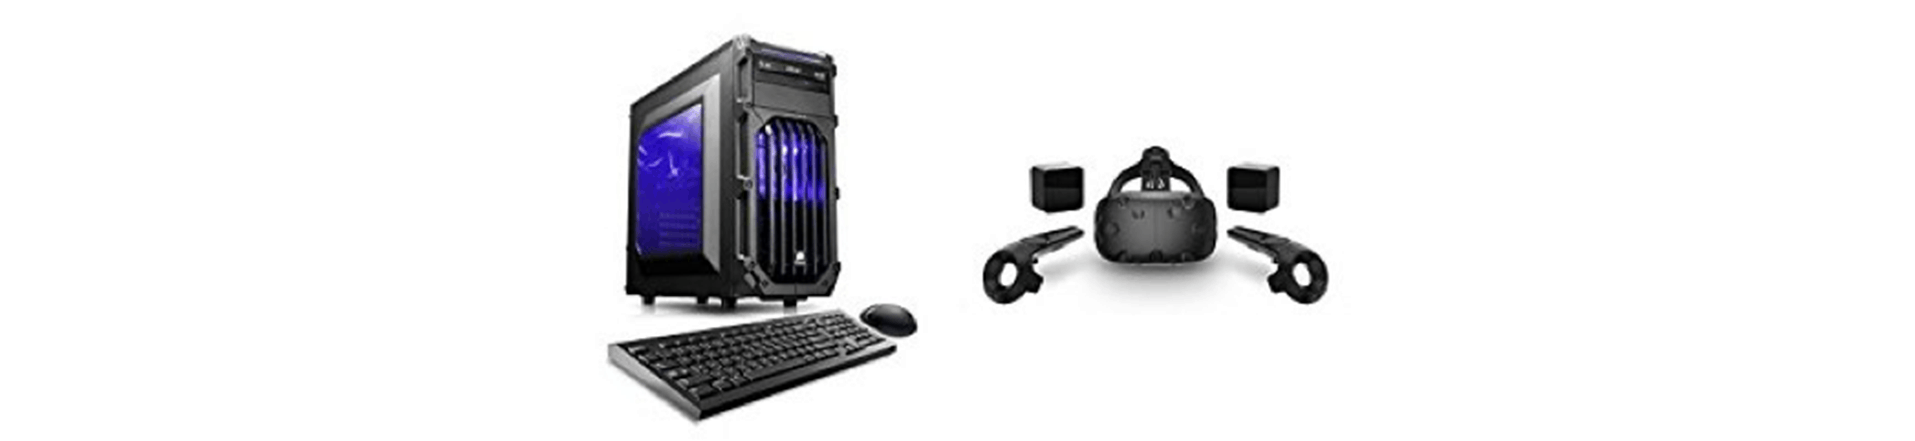 Oculus Rift - HTC Vive-vr-training-services-austin-visuals-technology